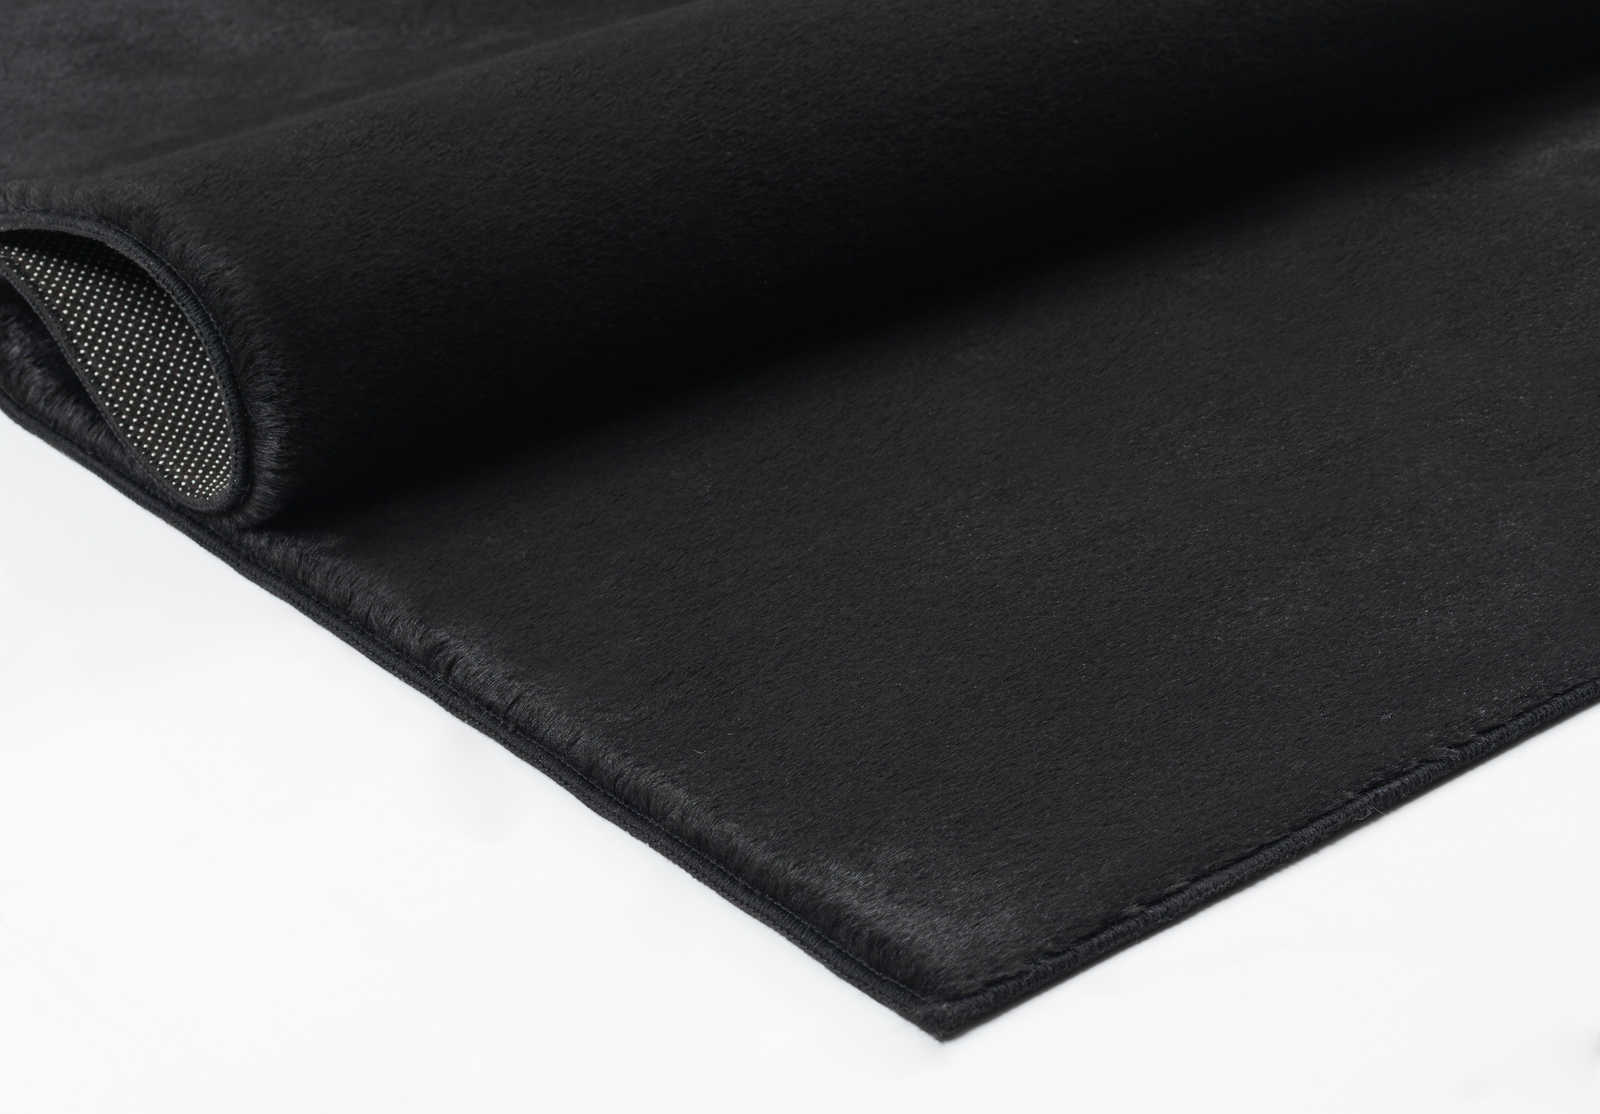             Cuddly soft high pile carpet in black - 200 x 140 cm
        